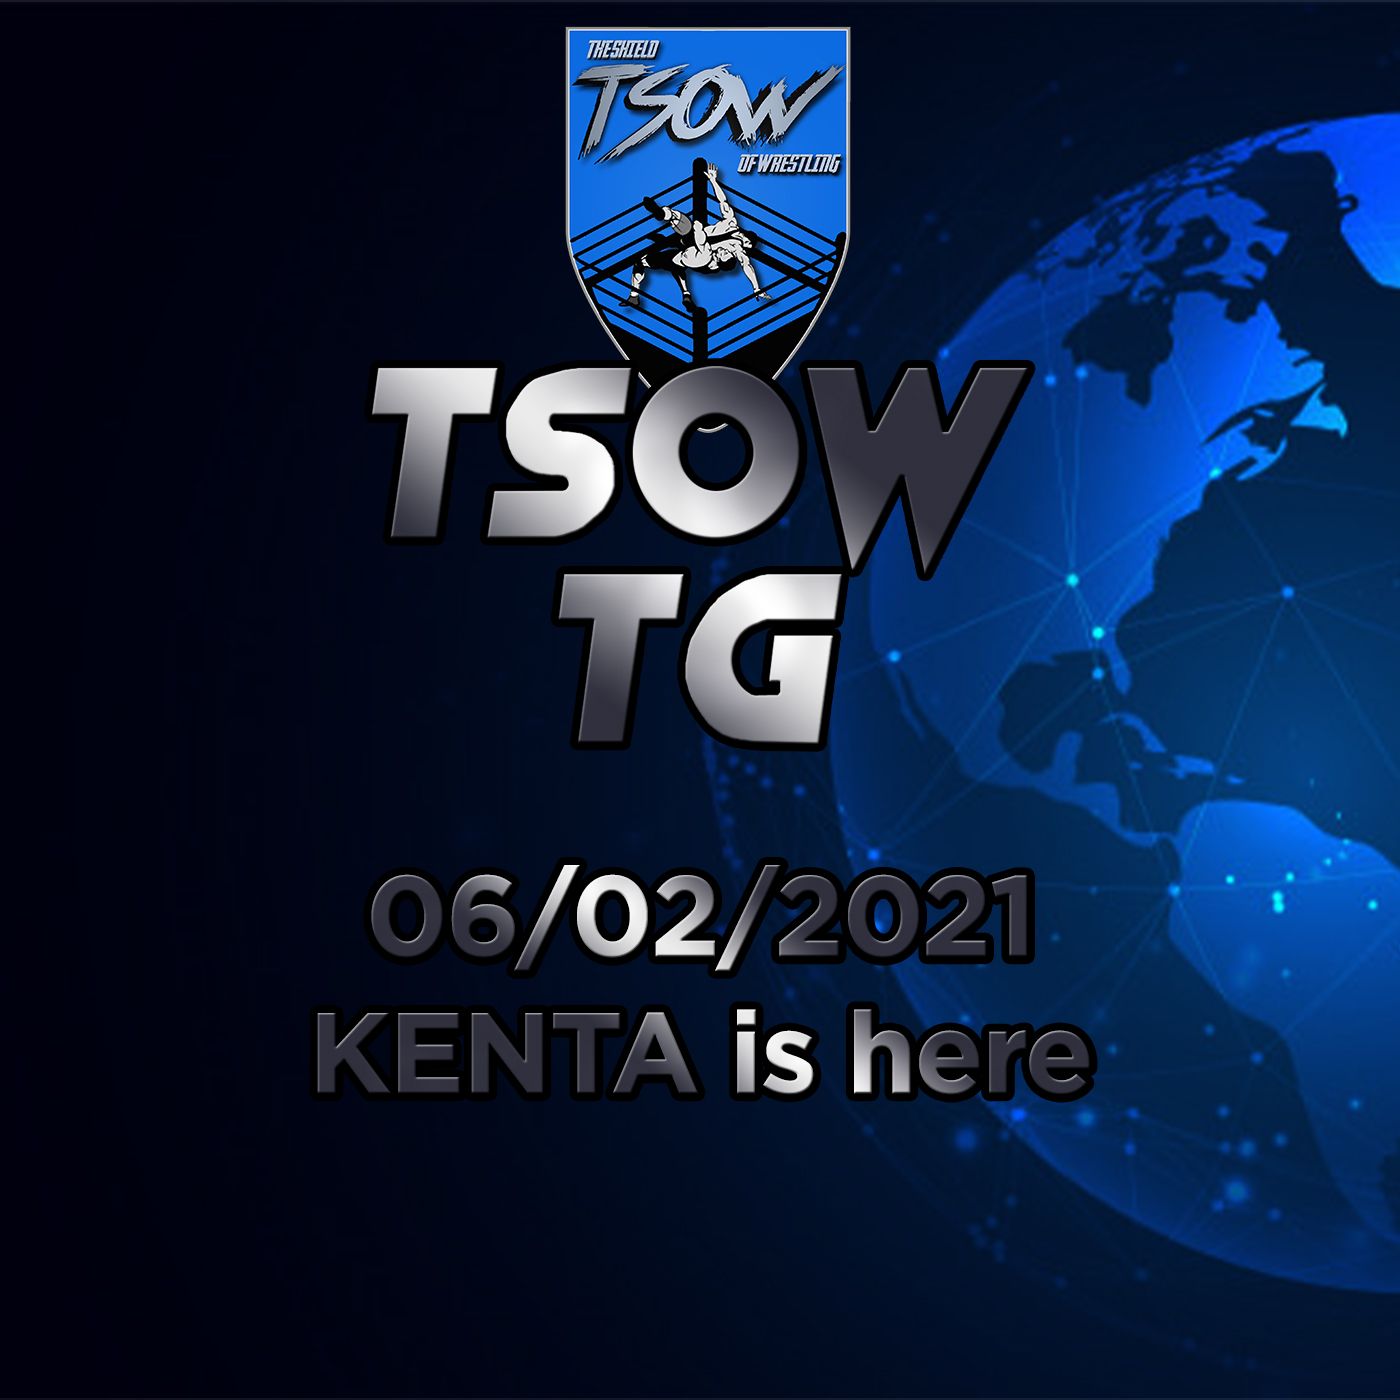 KENTA is here - TSOW TG 06/02/21